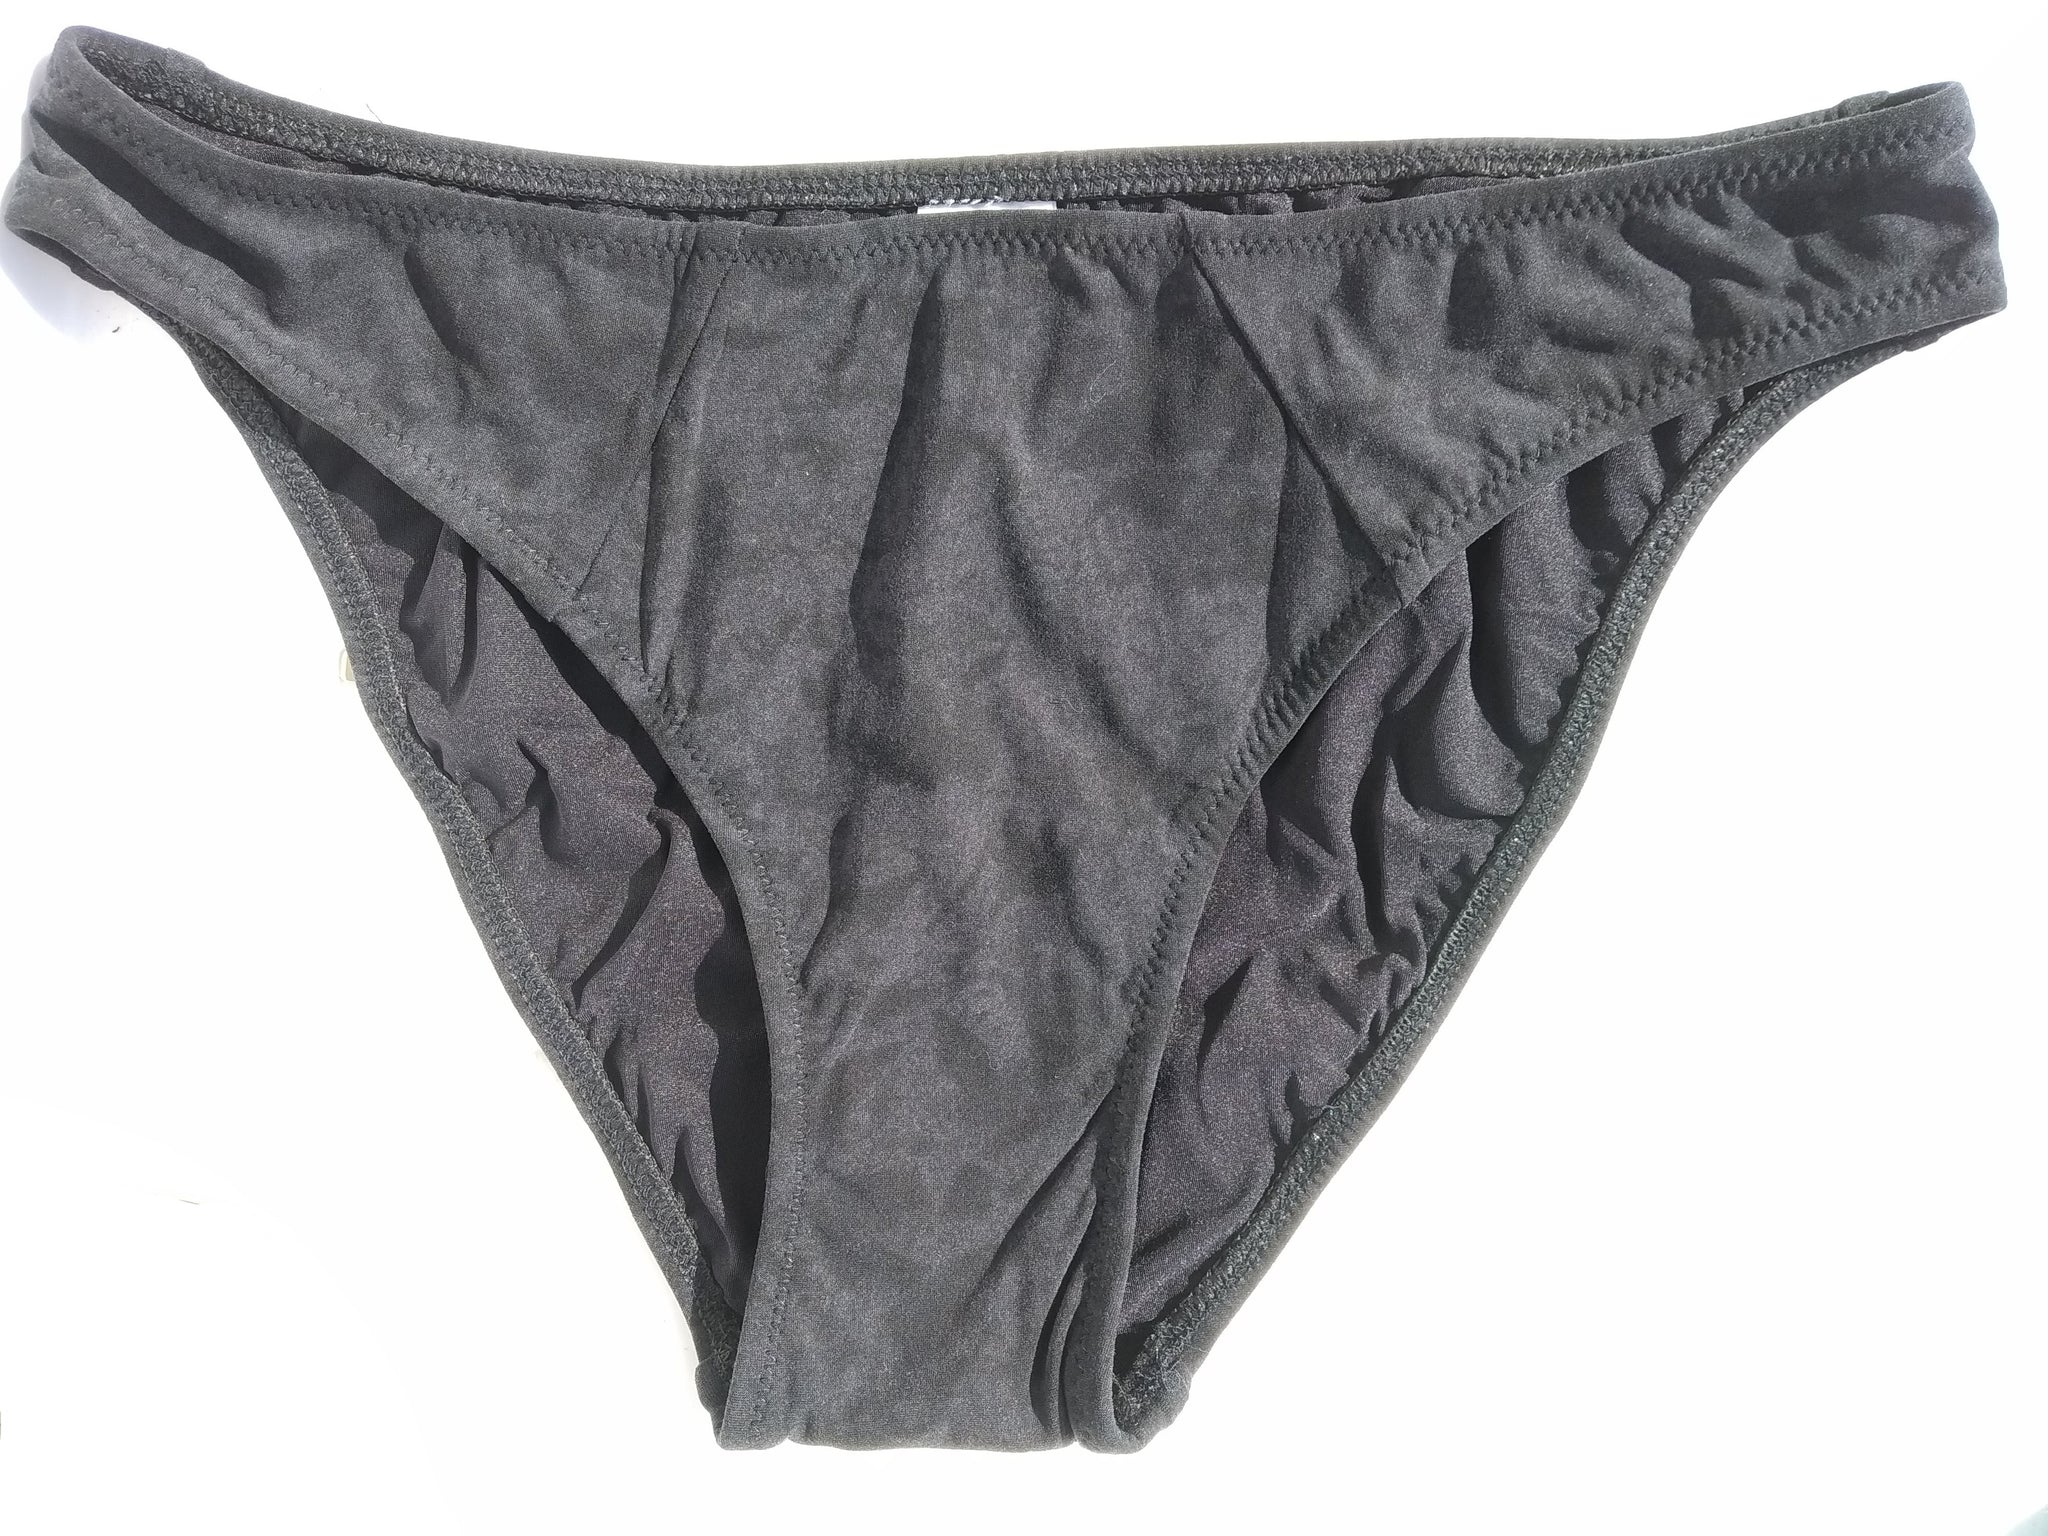 Flat view of the black regular bottom, fully lined, from the Malibu beach push-up black bikini set. bikinn.com